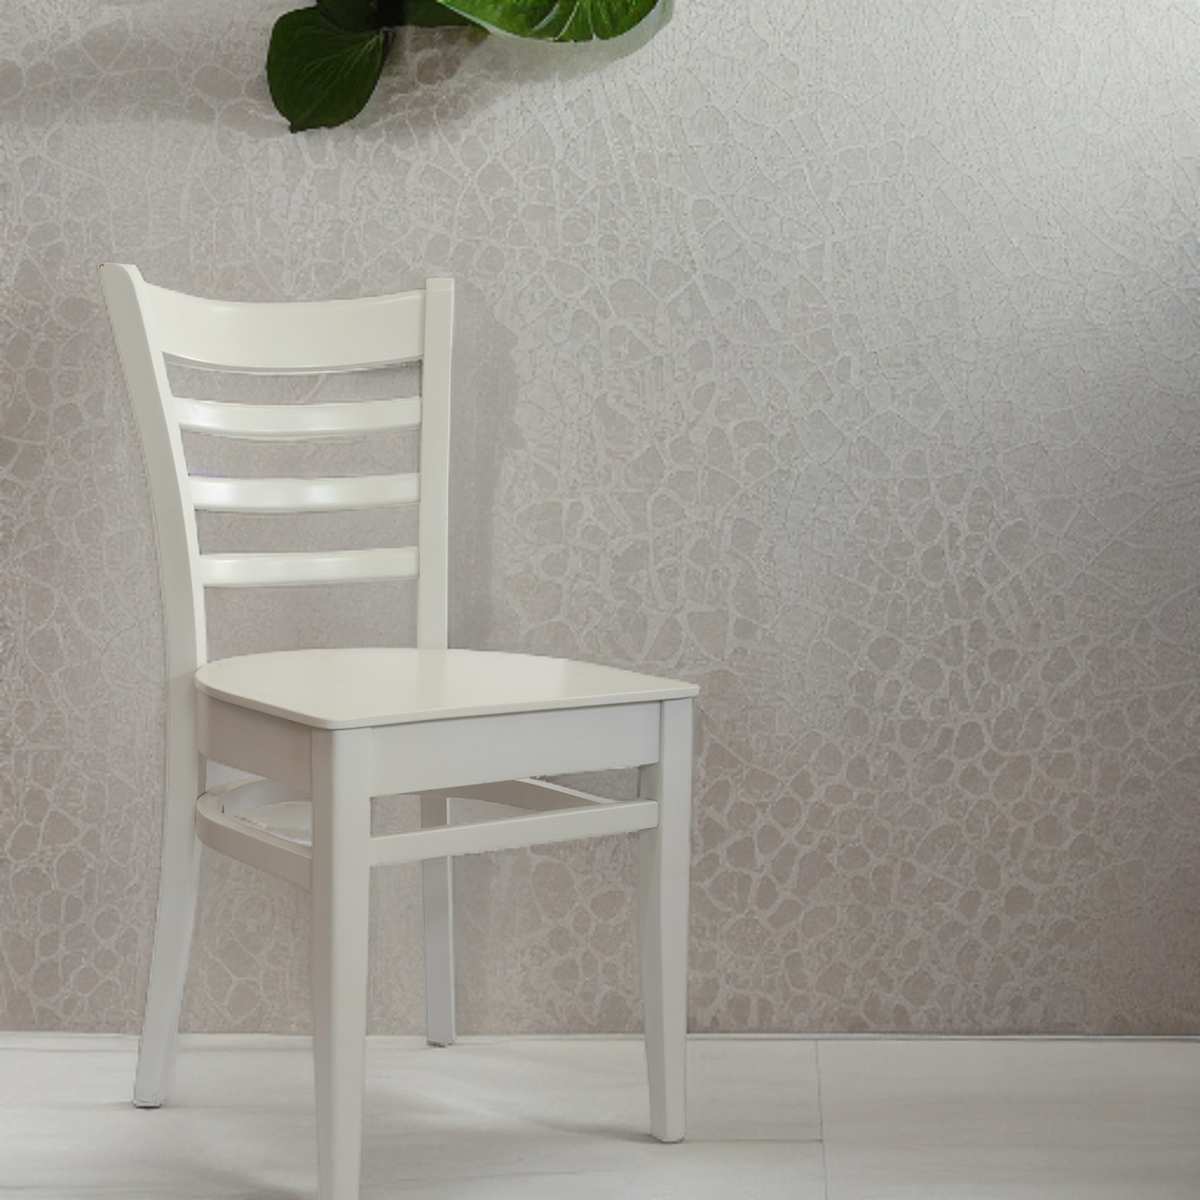 Krzeslo K85 - drewniane krzesła do jadalni